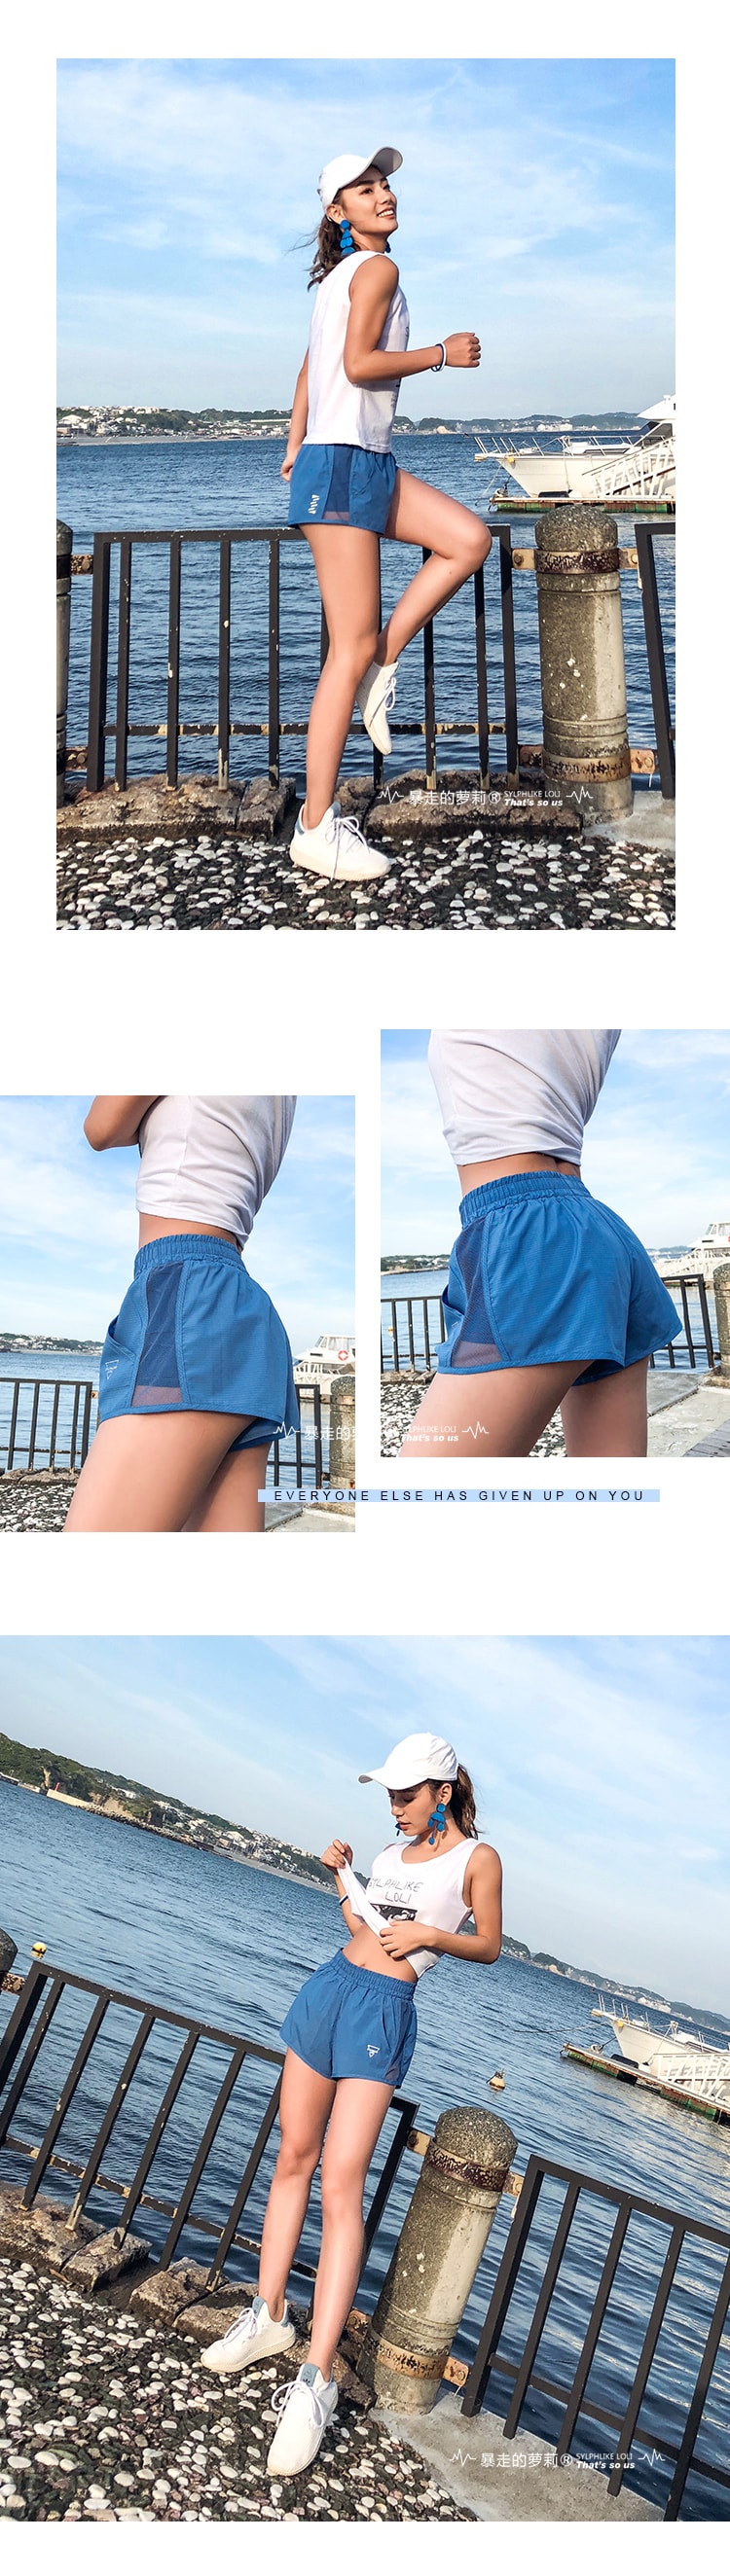 Sports High waist Shorts For Running Outdoor/Blue#/S